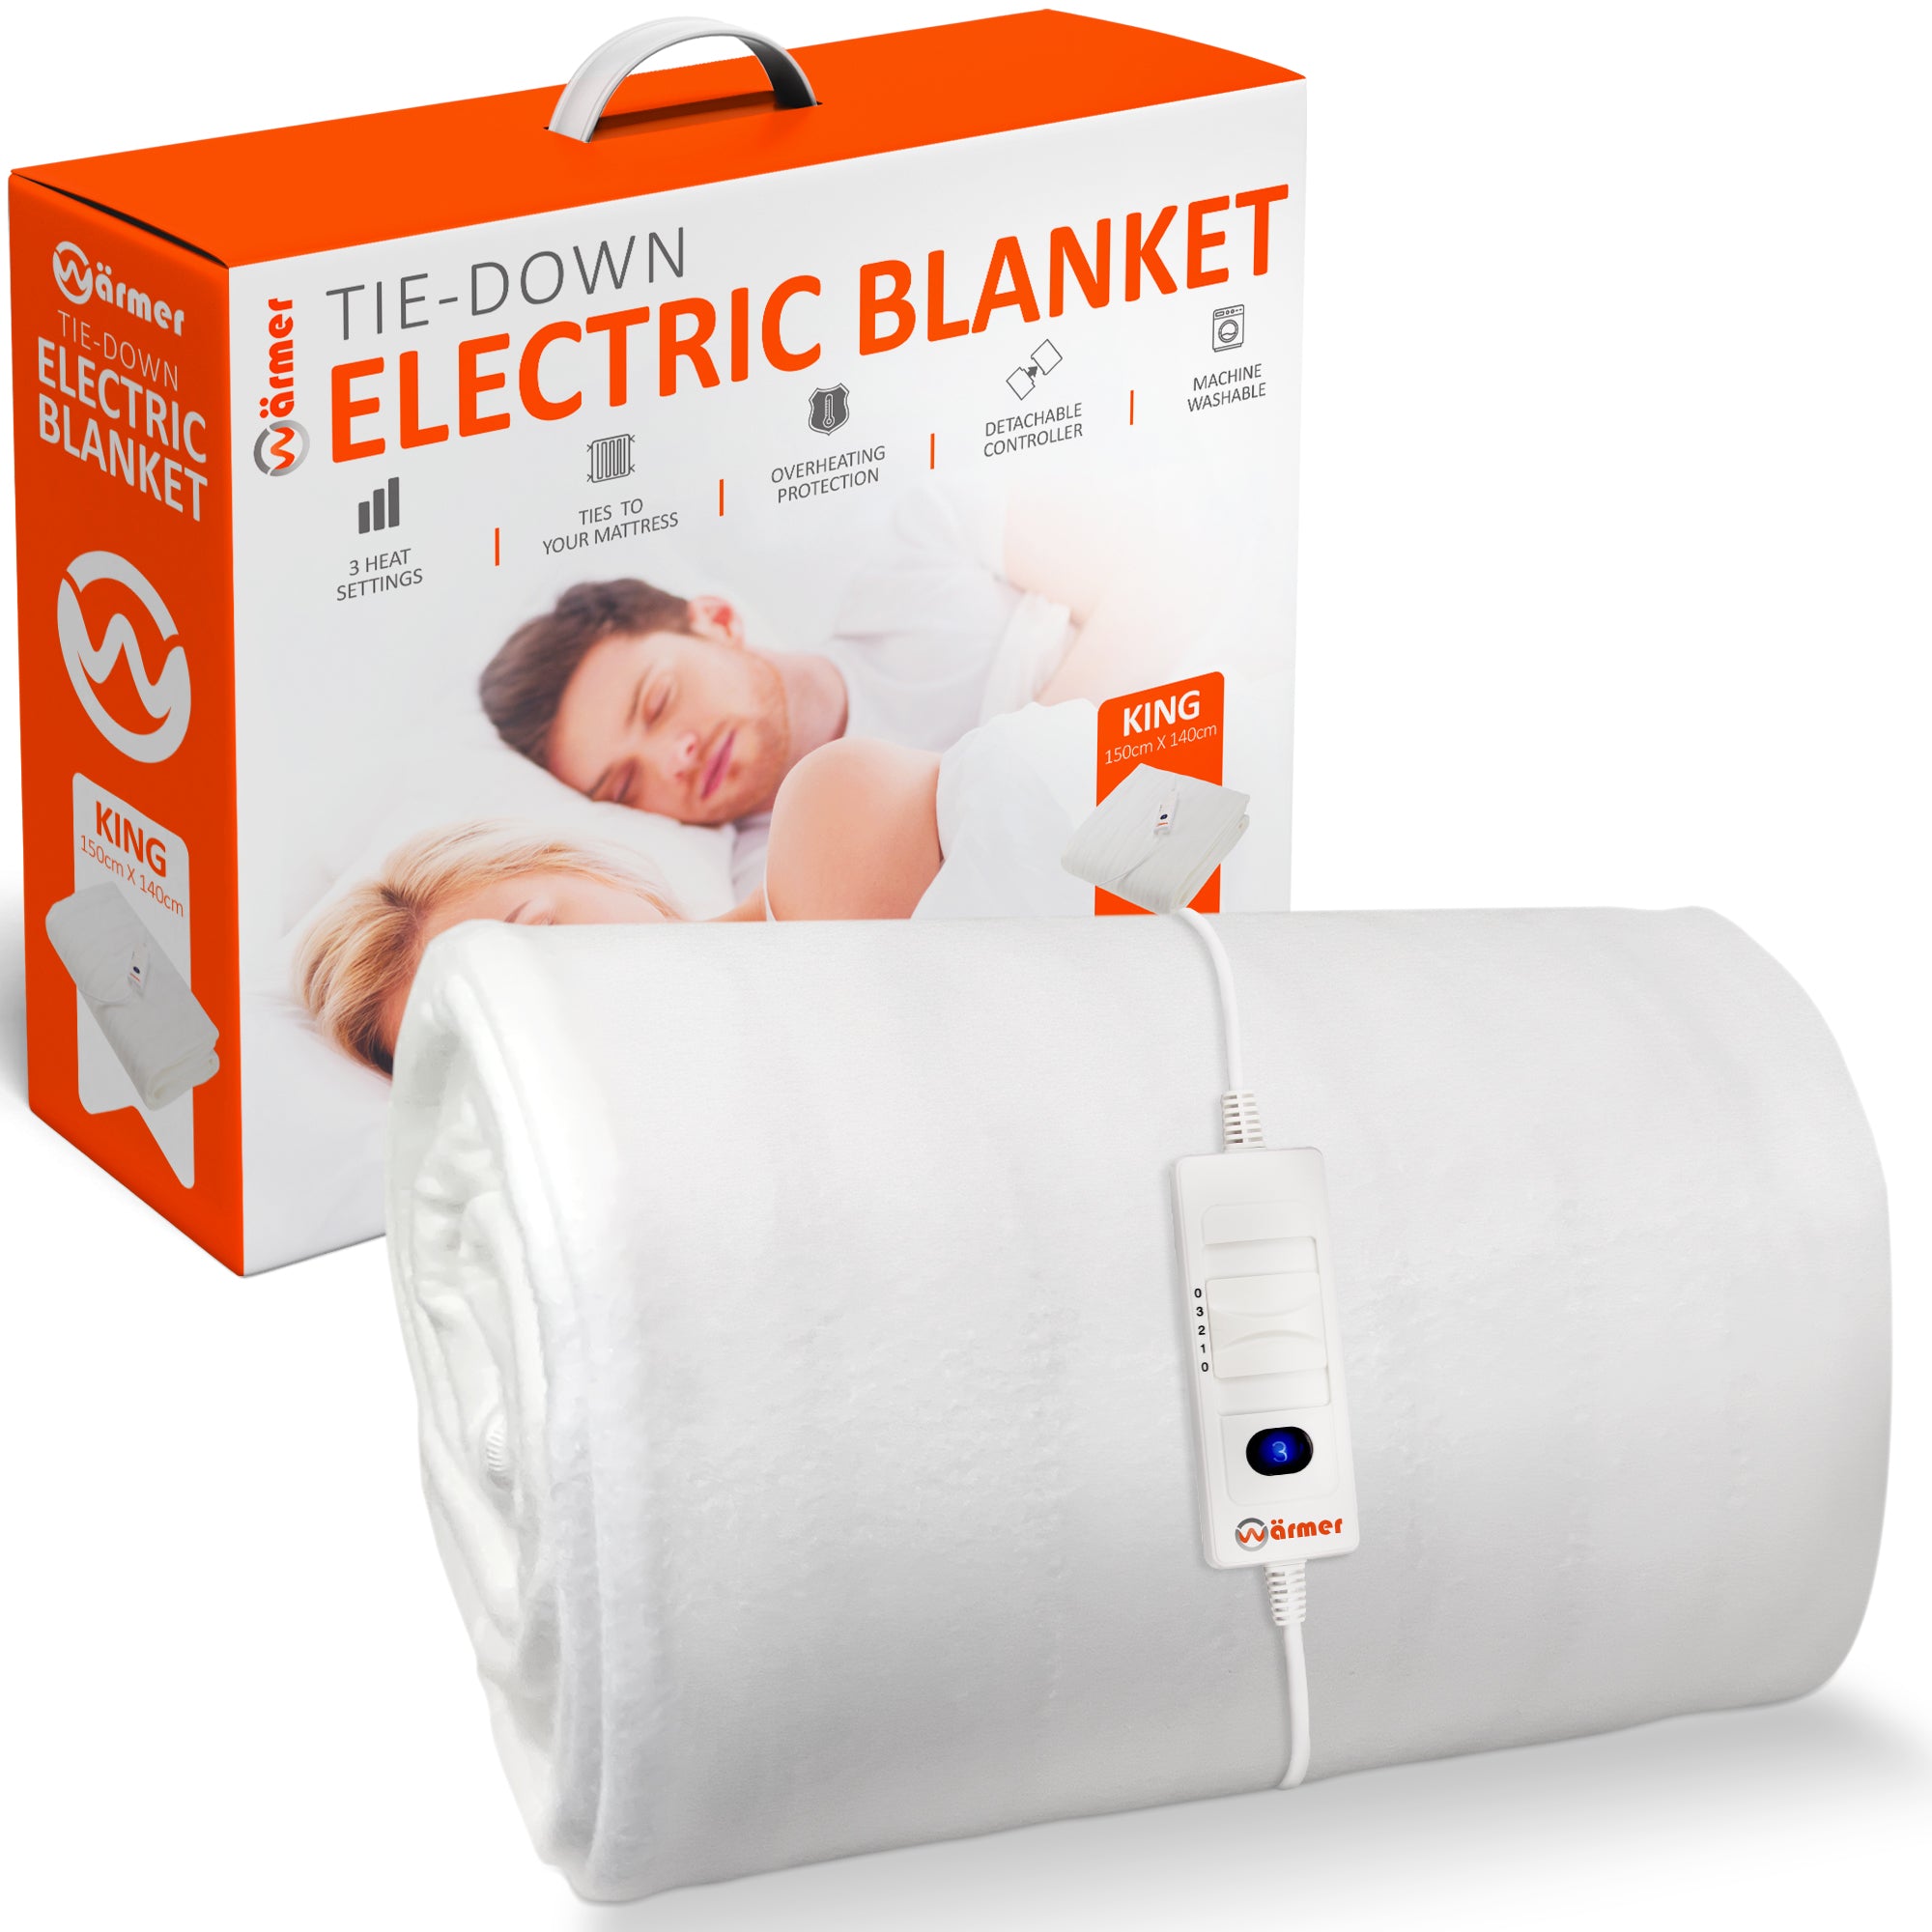 Wärmer Tie-down Electric Blanket 3 Heat Settings With 1 Controller